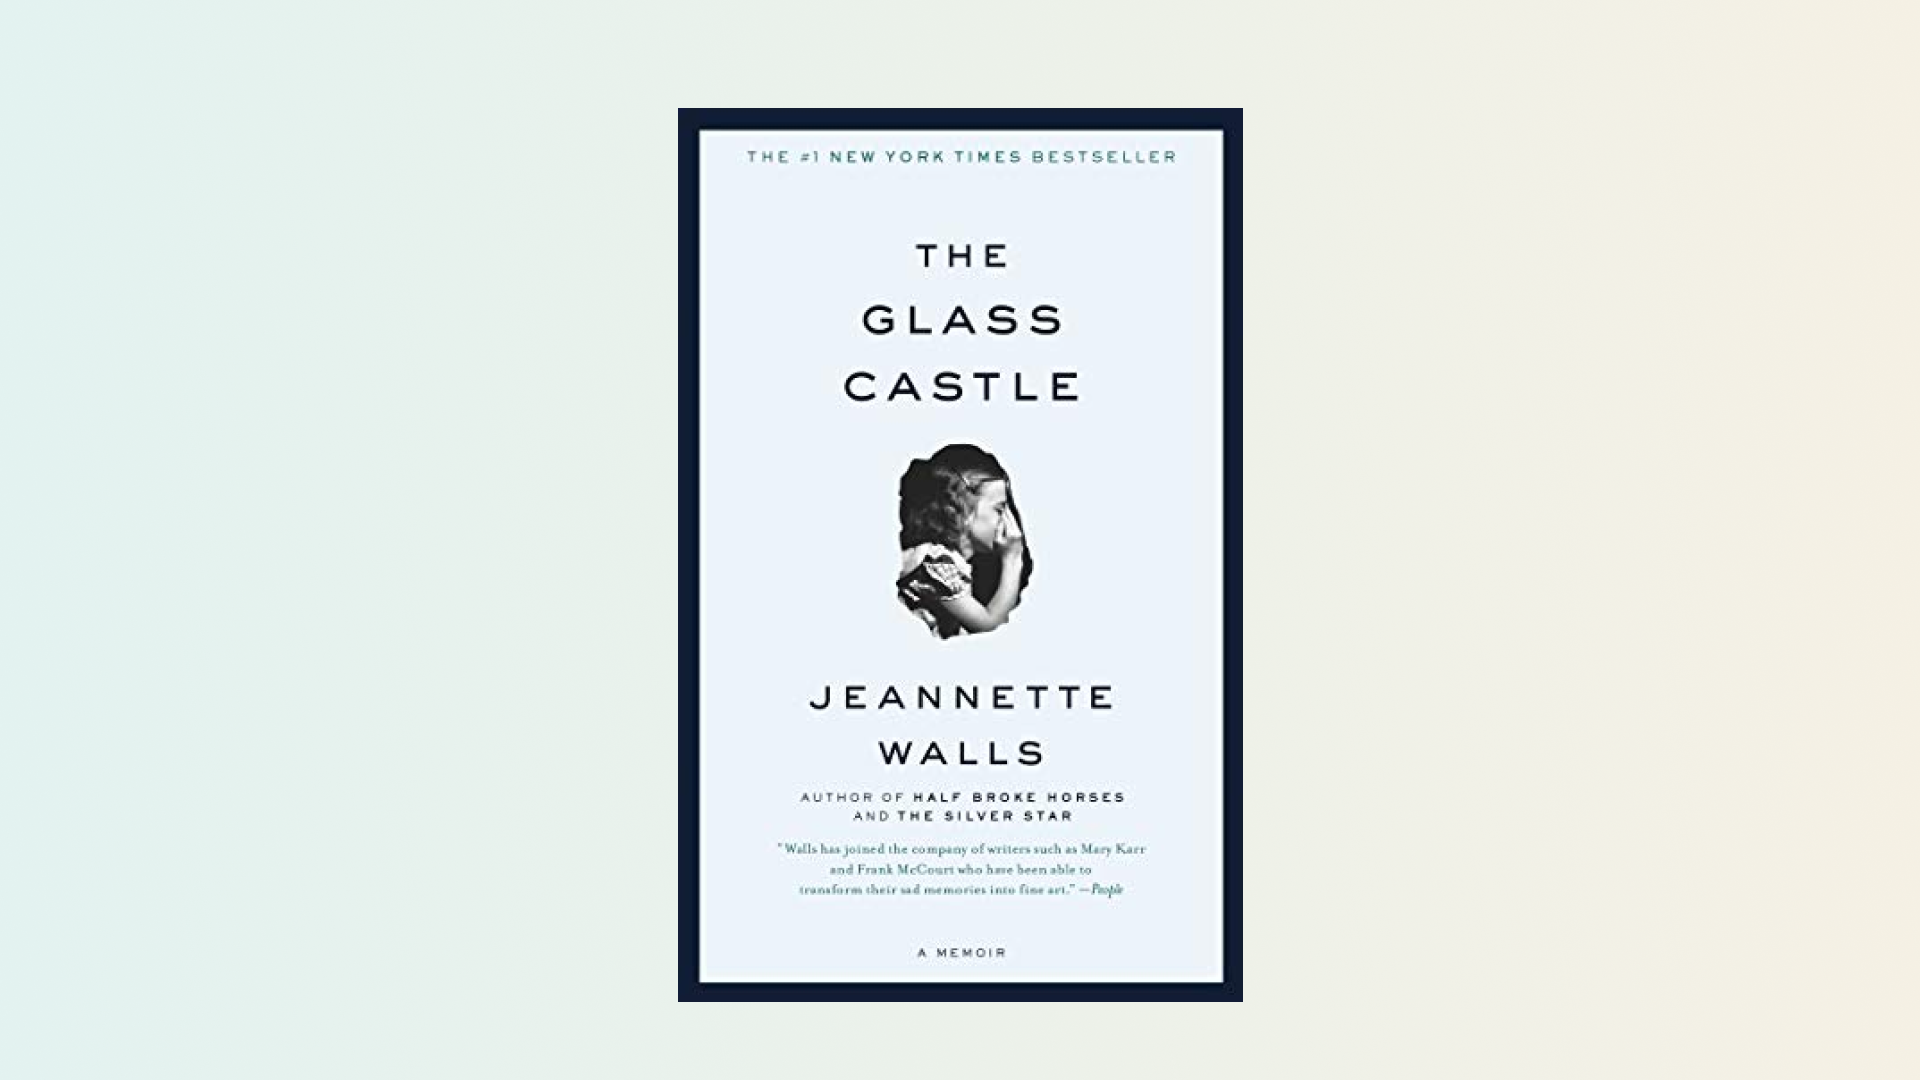 “The Glass Castle” by Jeannette Walls